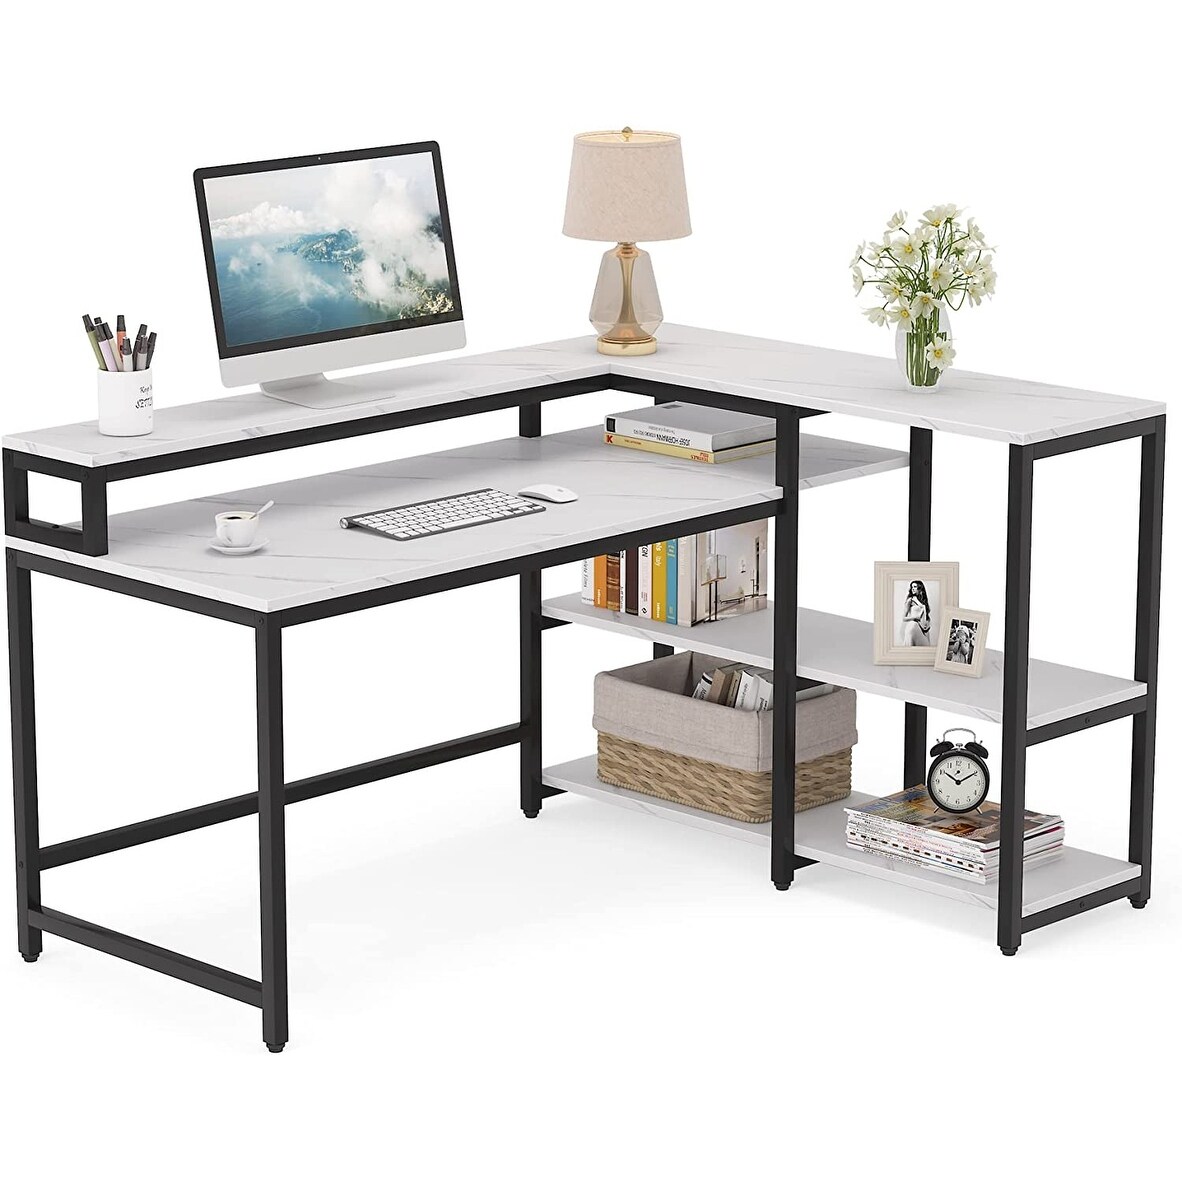 https://ak1.ostkcdn.com/images/products/is/images/direct/8d3fa2d6ea5b6c0e99eaedef770a7bd5adf55c23/55-Inch-Reversible-L-Shaped-Desk-with-Storage-Shelf%2C-Corner-Desk-for-Home-Office.jpg